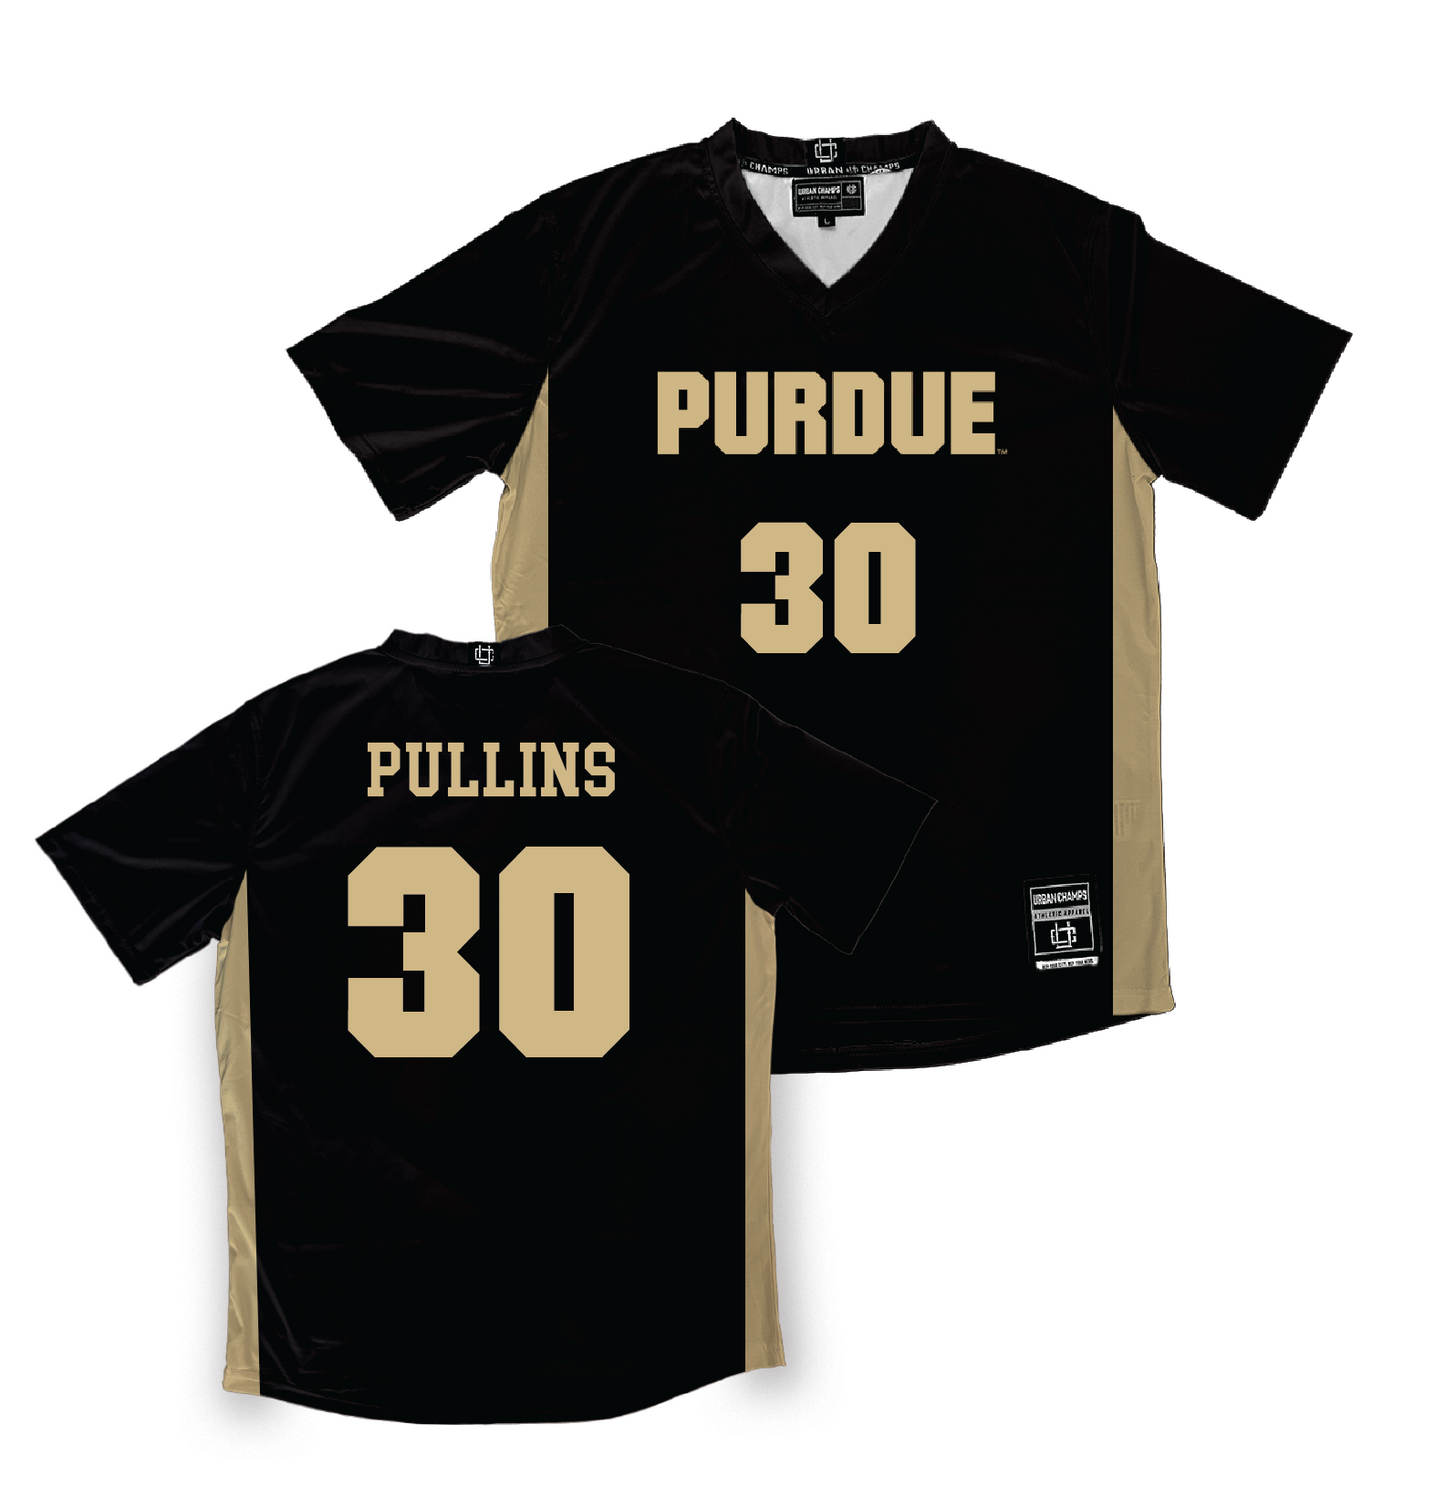 Purdue Women's Soccer Black Jersey - Samantha Pullins | #30